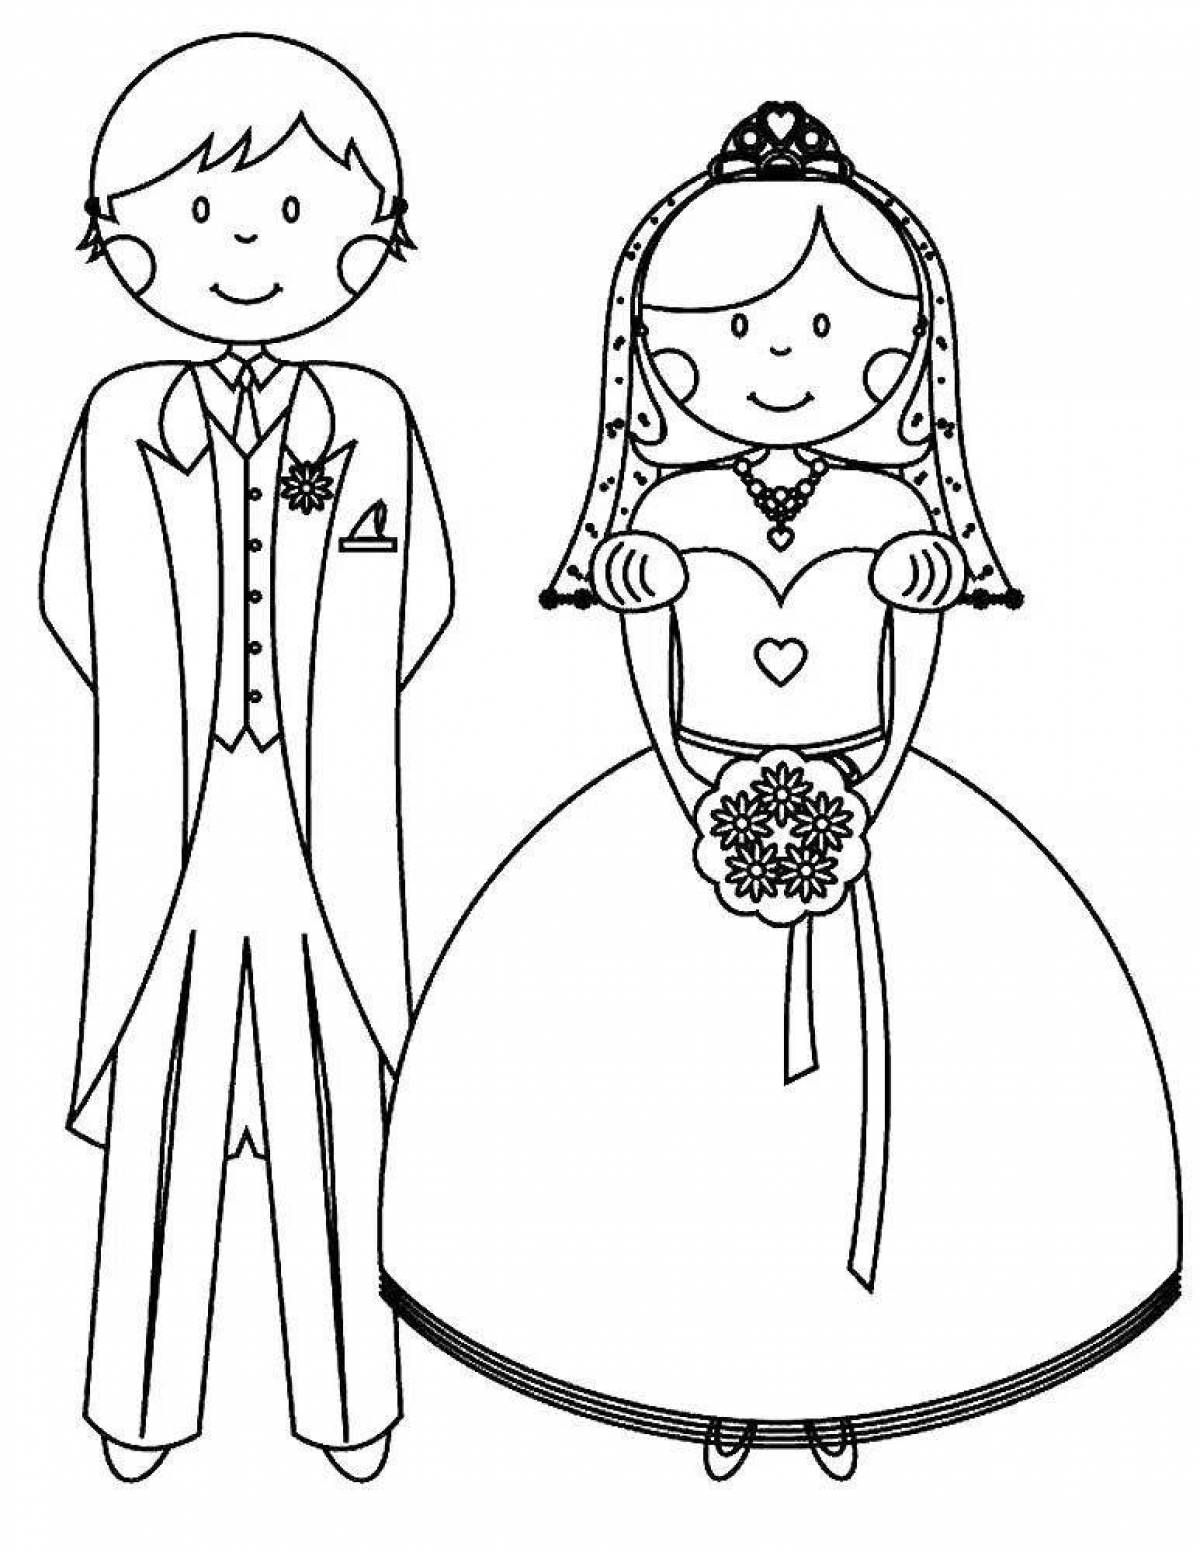 Coloring page charming bride